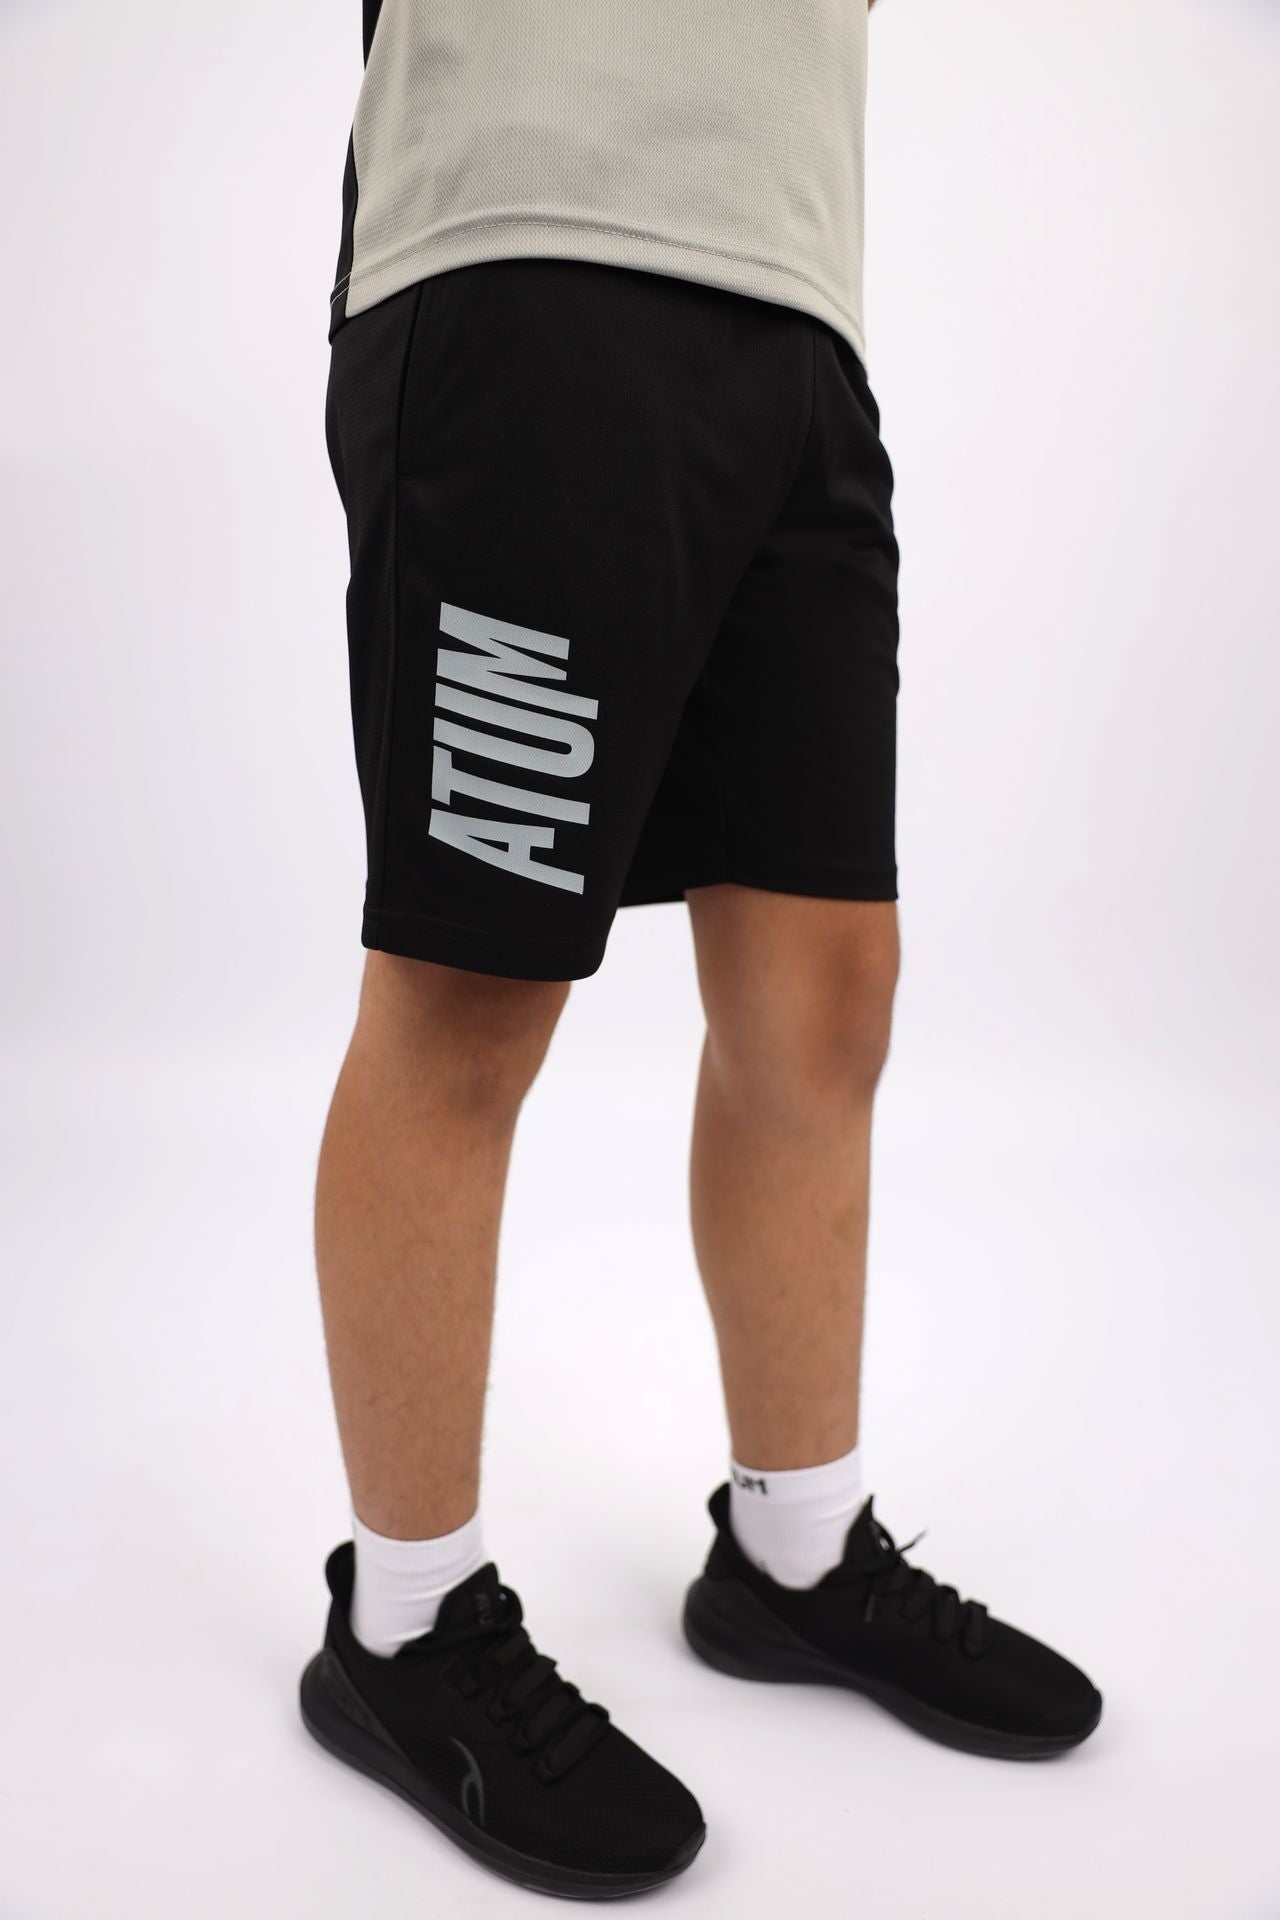 Atum Boy's Graphic Logo Sports Shorts